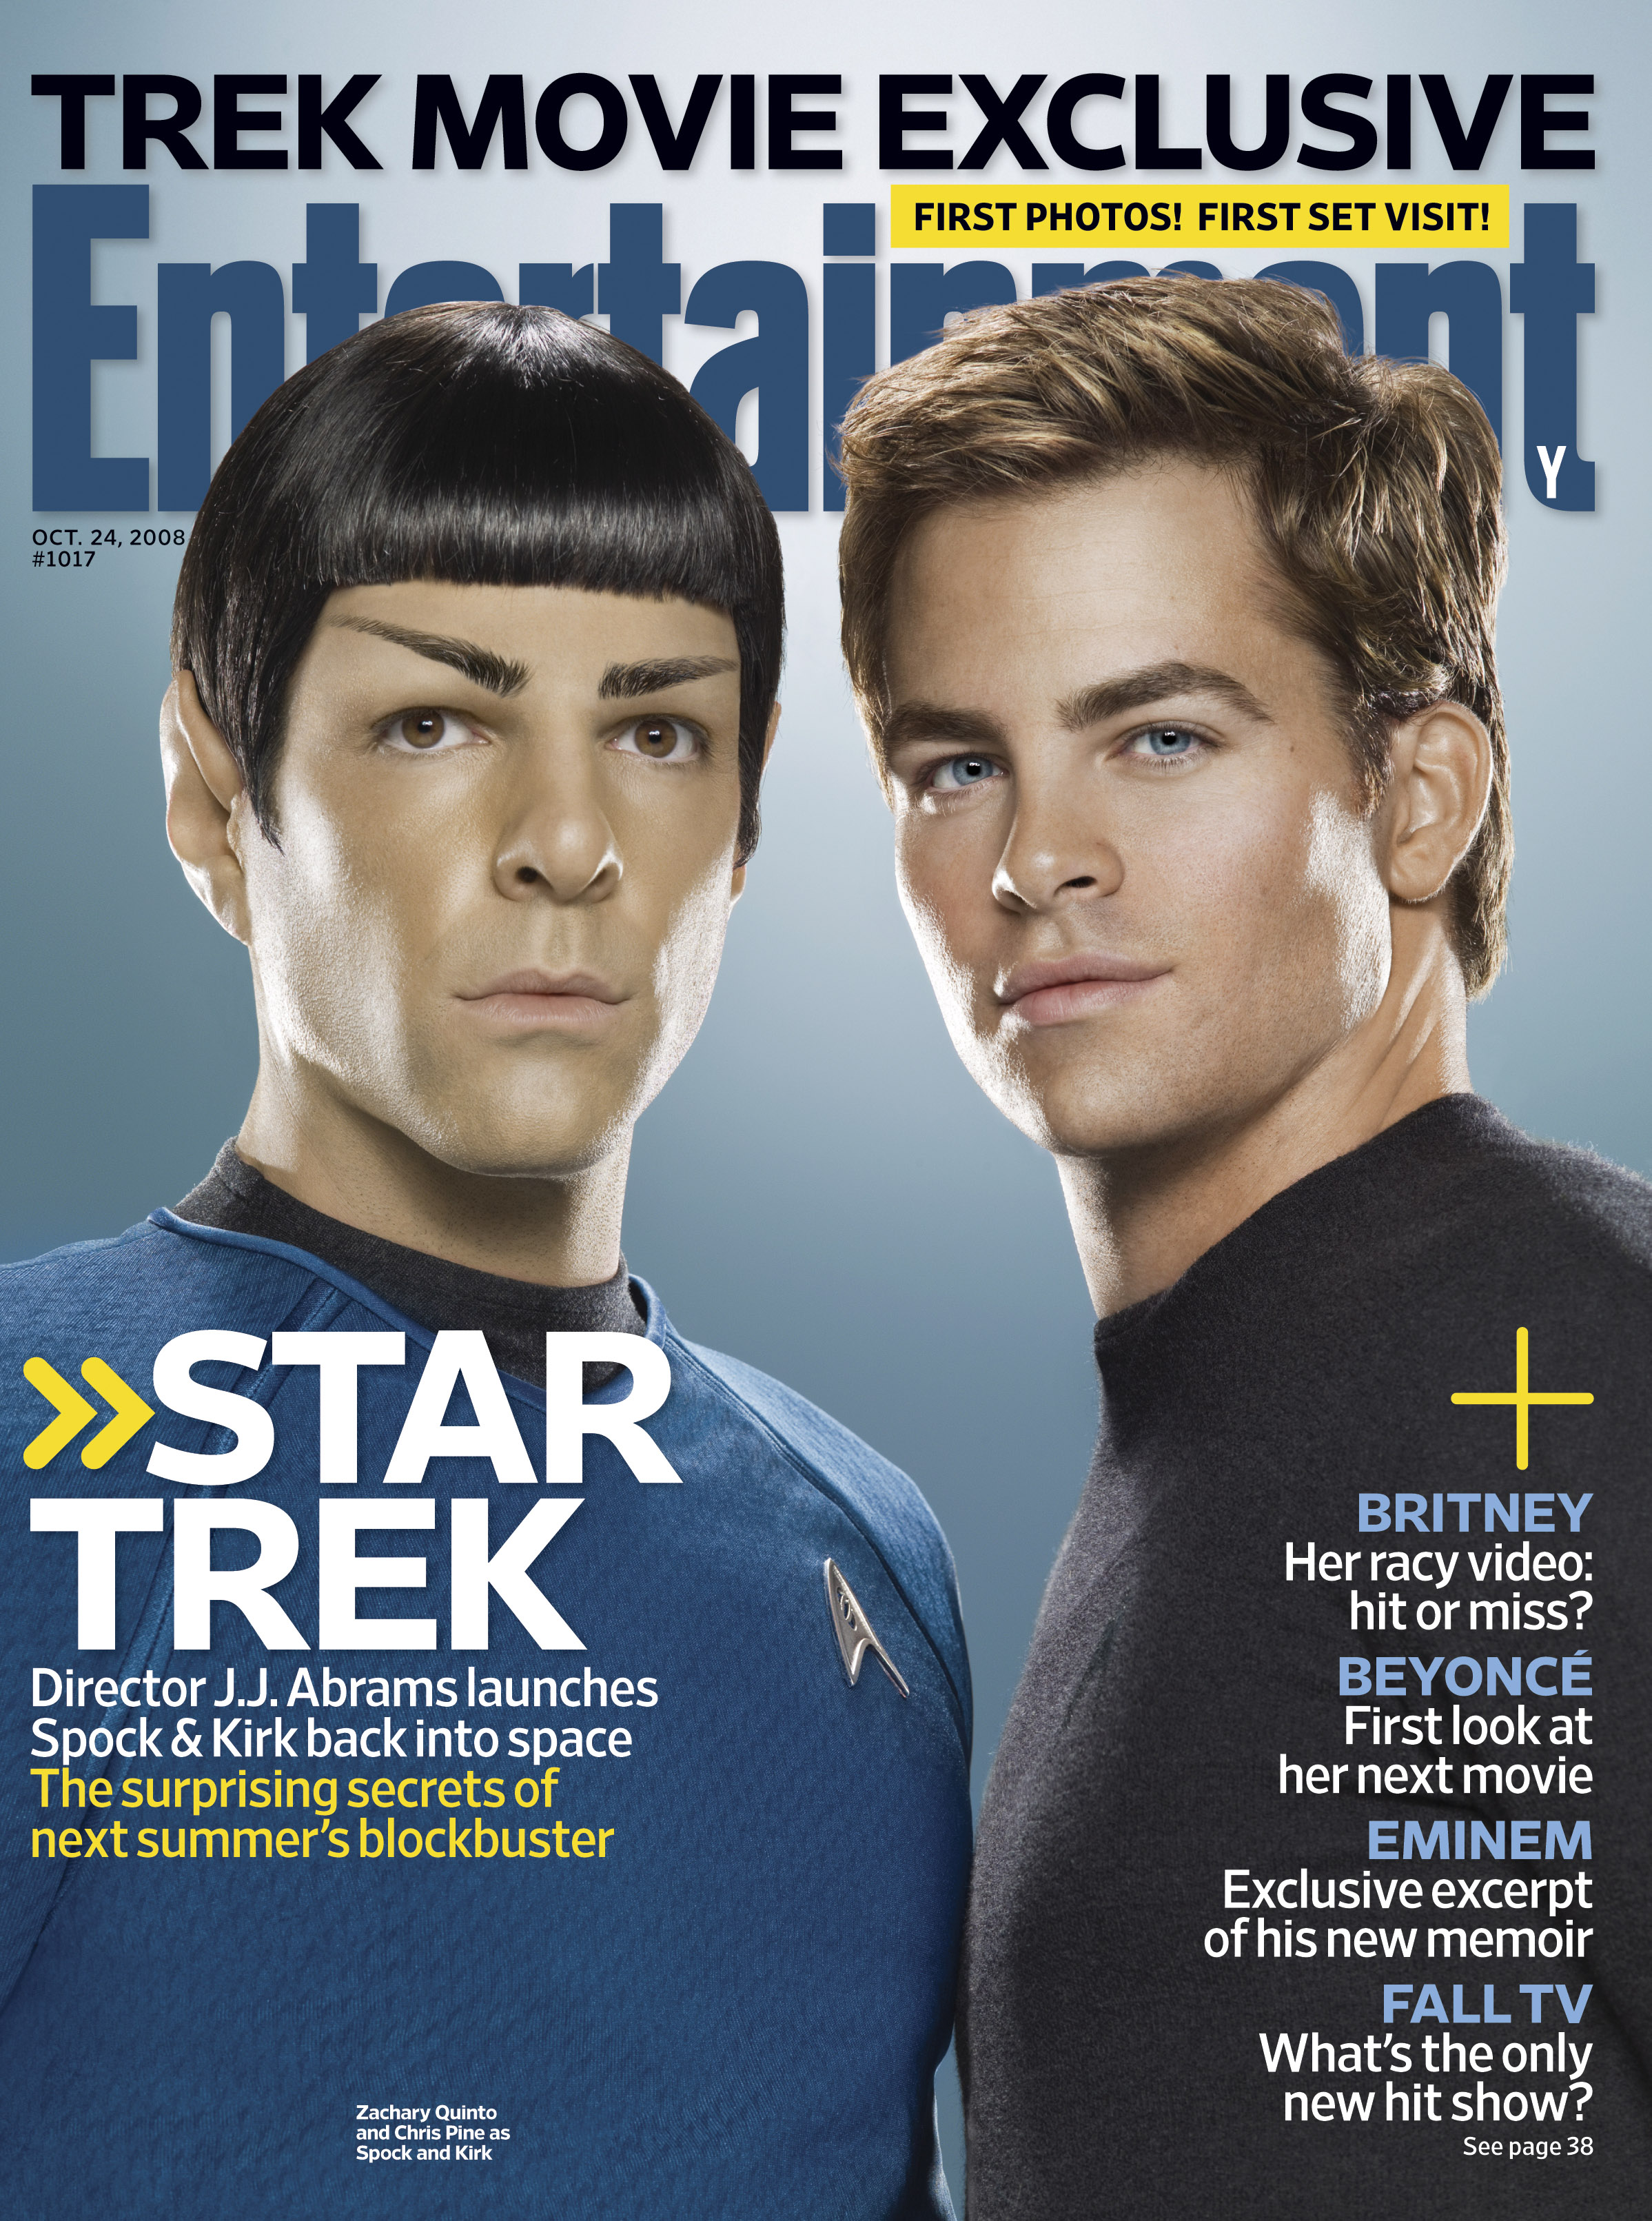 Star Trek, James T. Kirk - desktop wallpaper